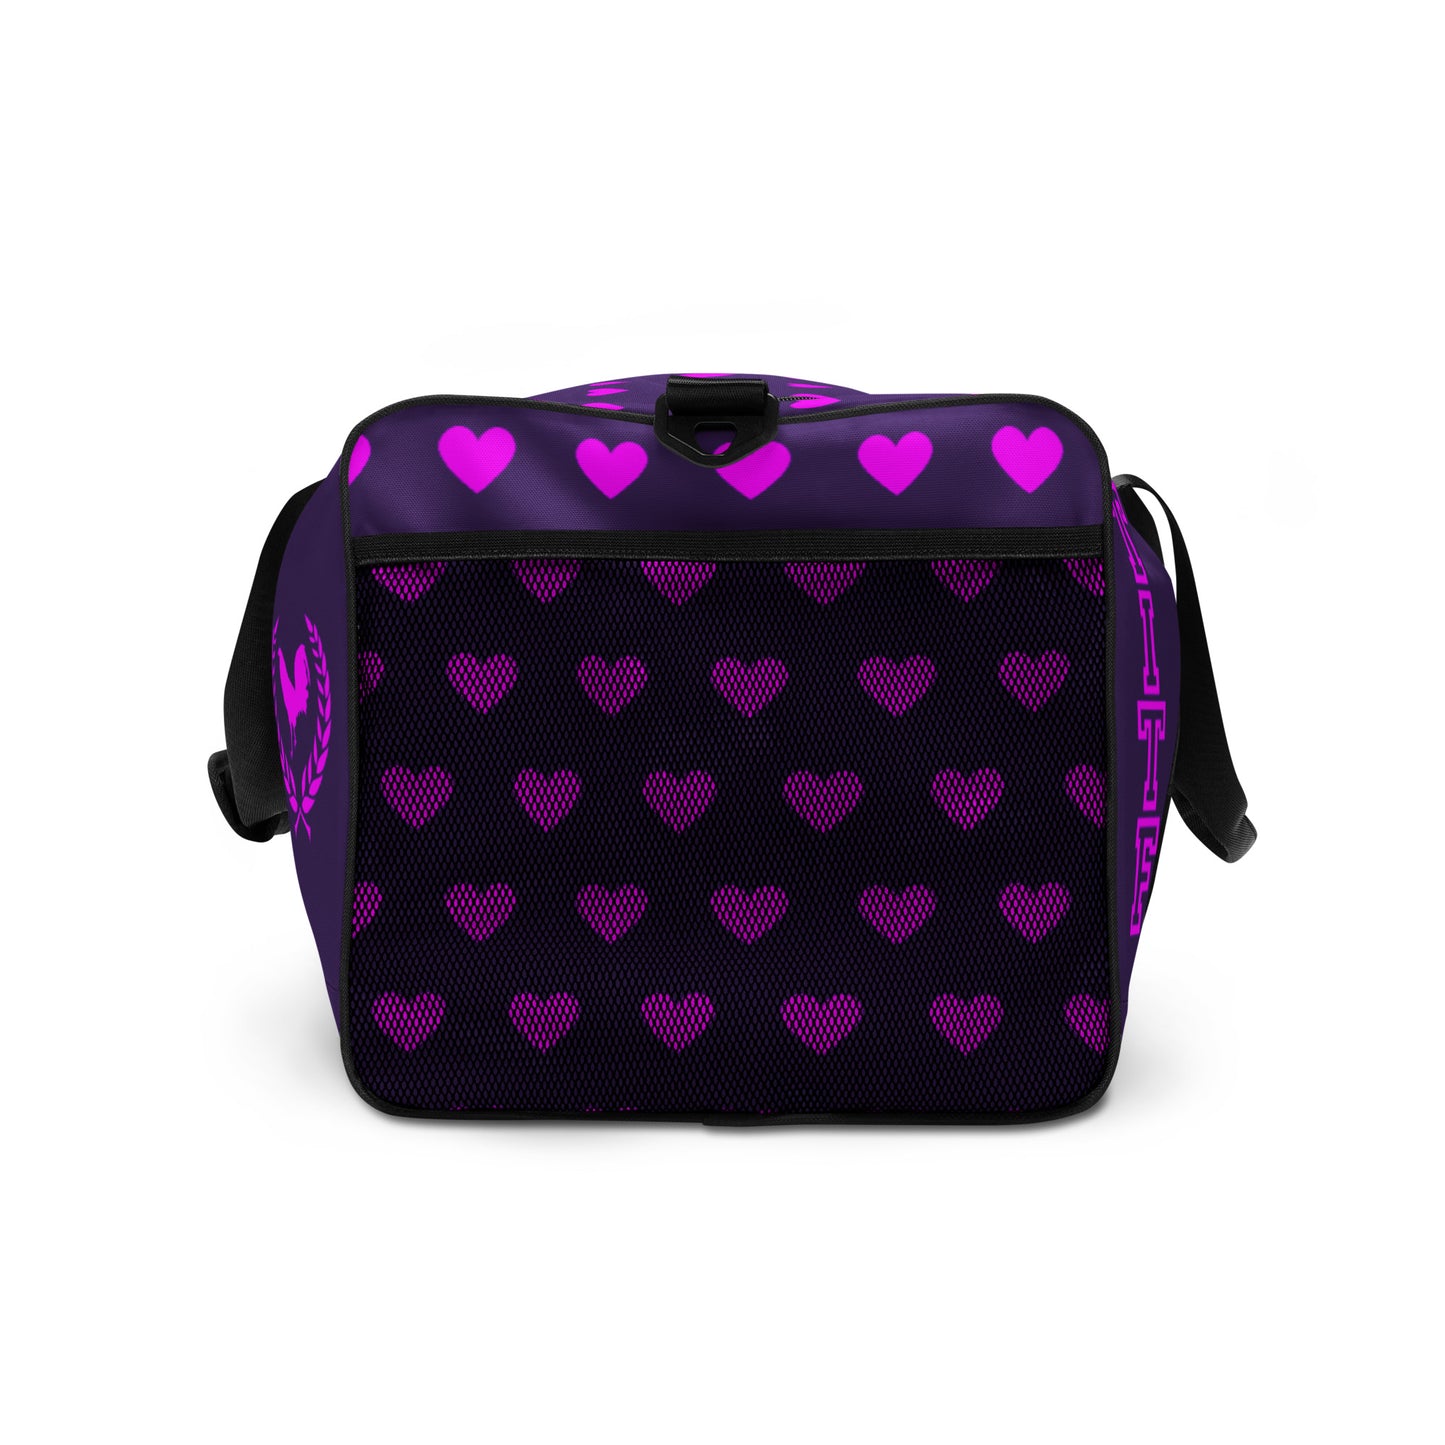 VS LOVE FOWL PINK HEART Gamefowl Rooster Indigo Duffle Bag